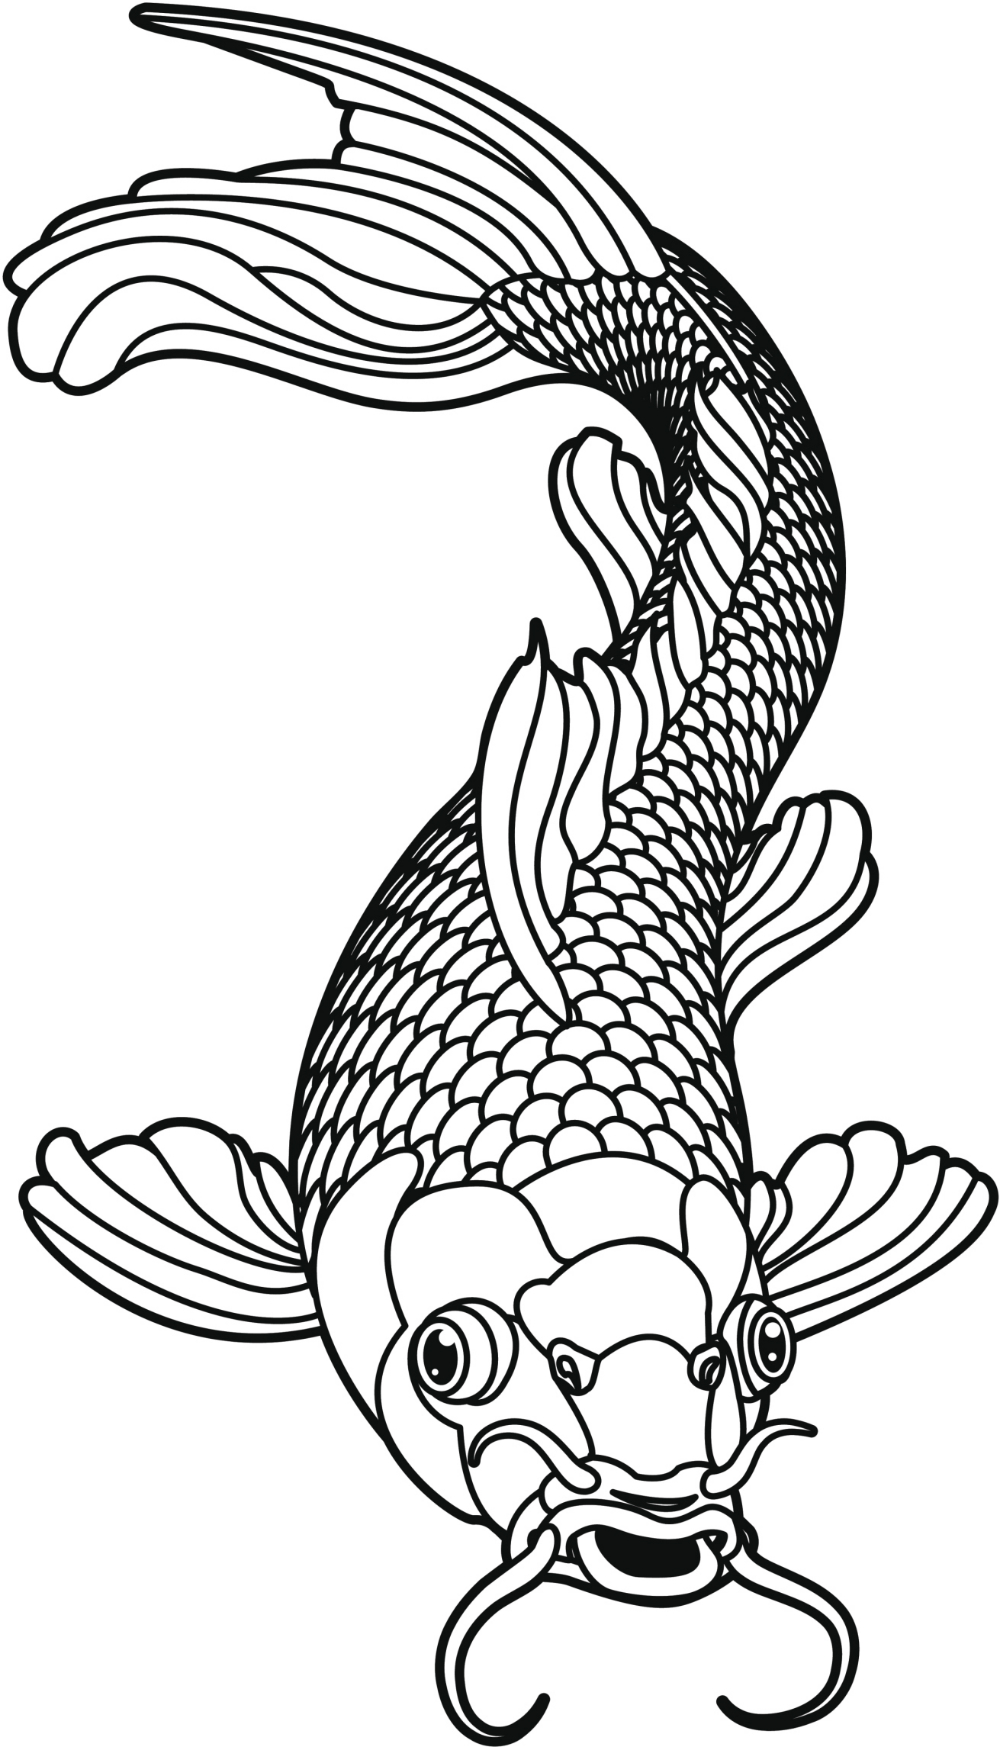 Koi Fish Outline Drawing at GetDrawings | Free download